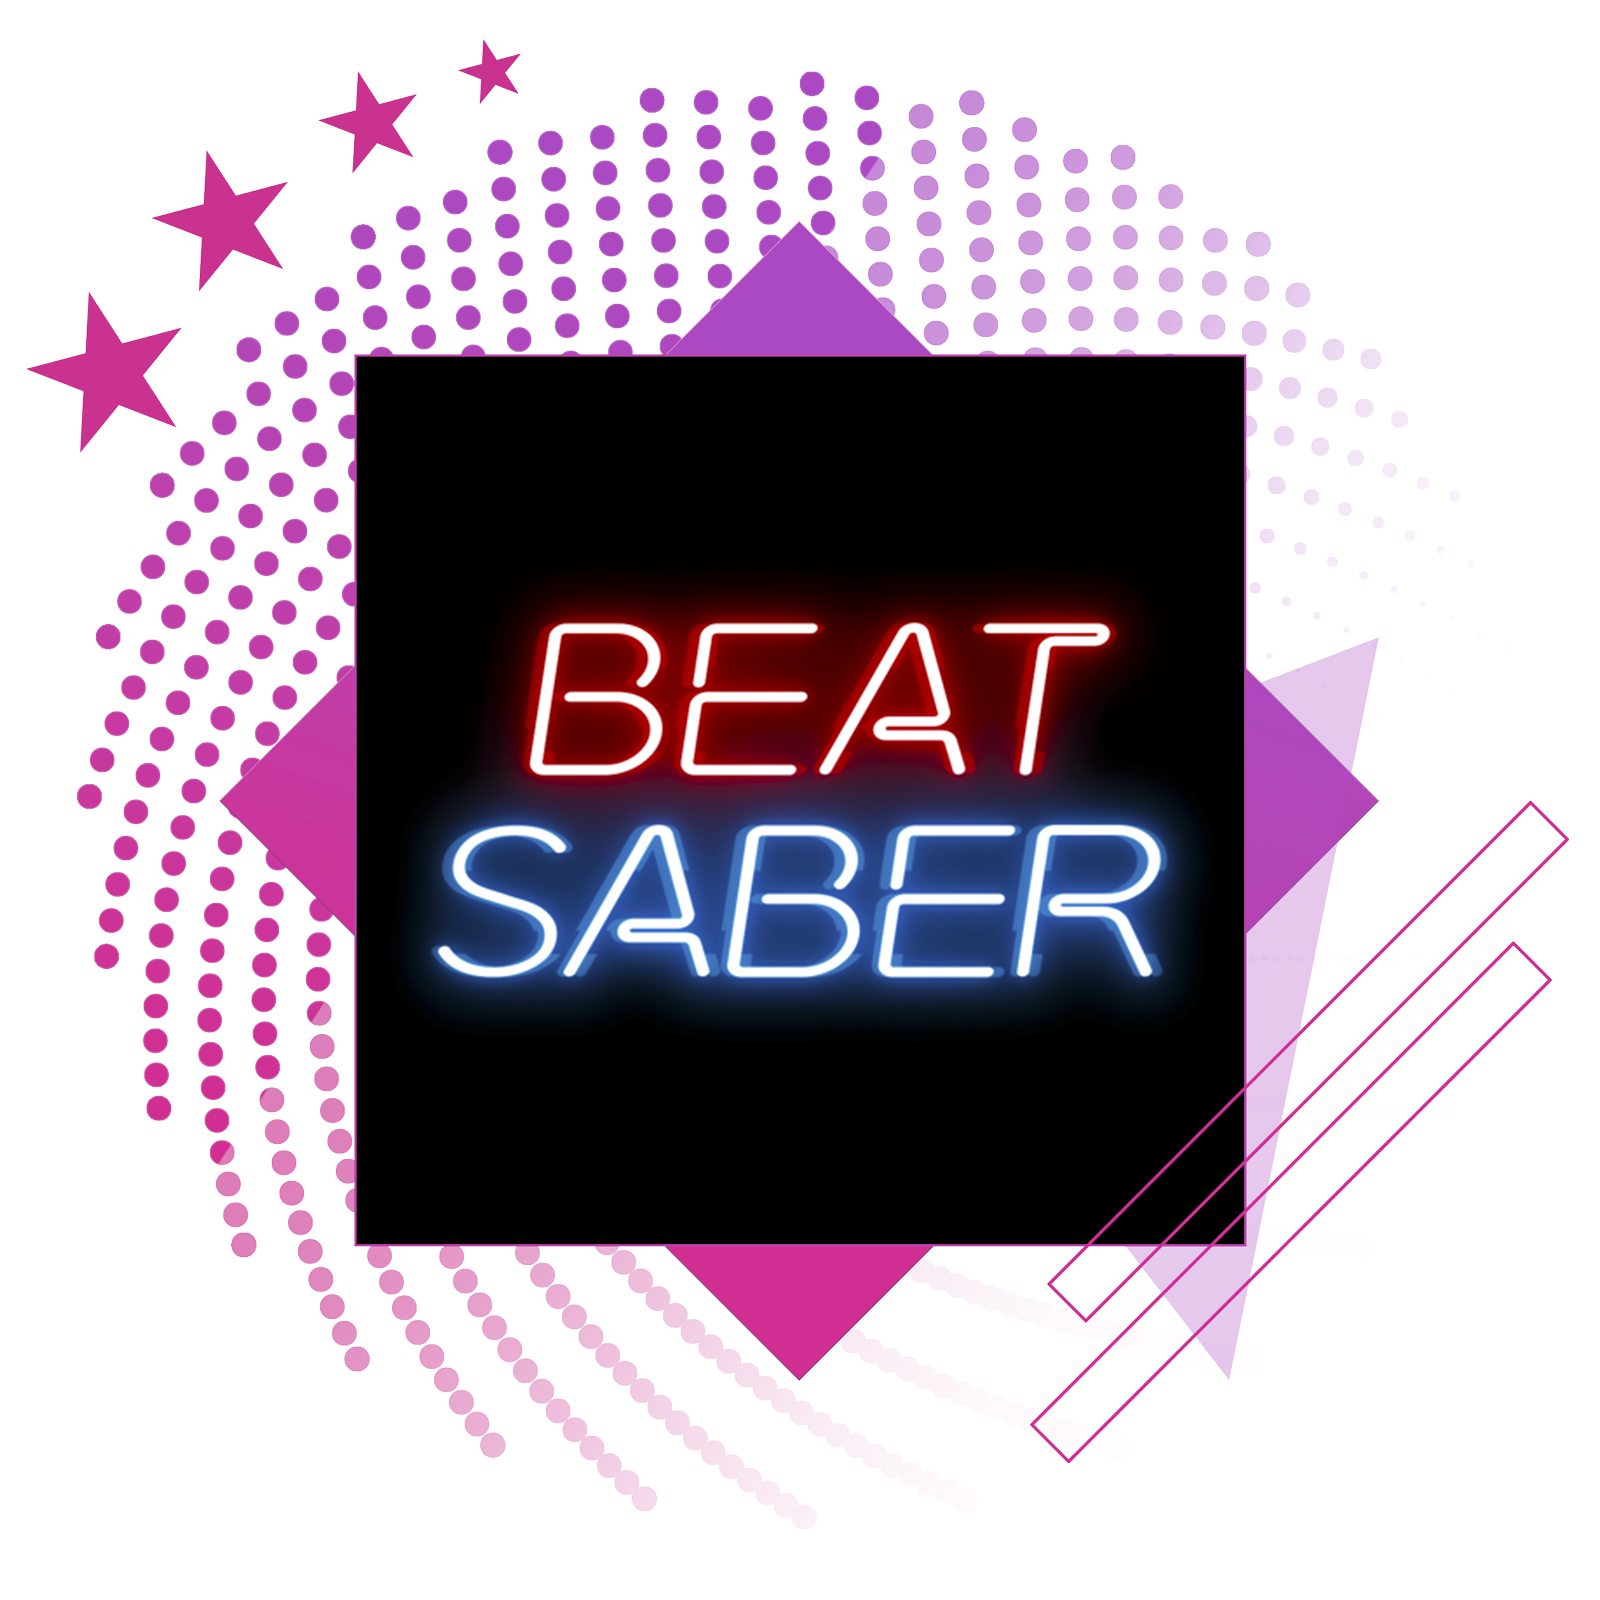 Najbolje ritmičke igre, naslovna slika s glavnom ilustracijom iz igre Beat Saber.